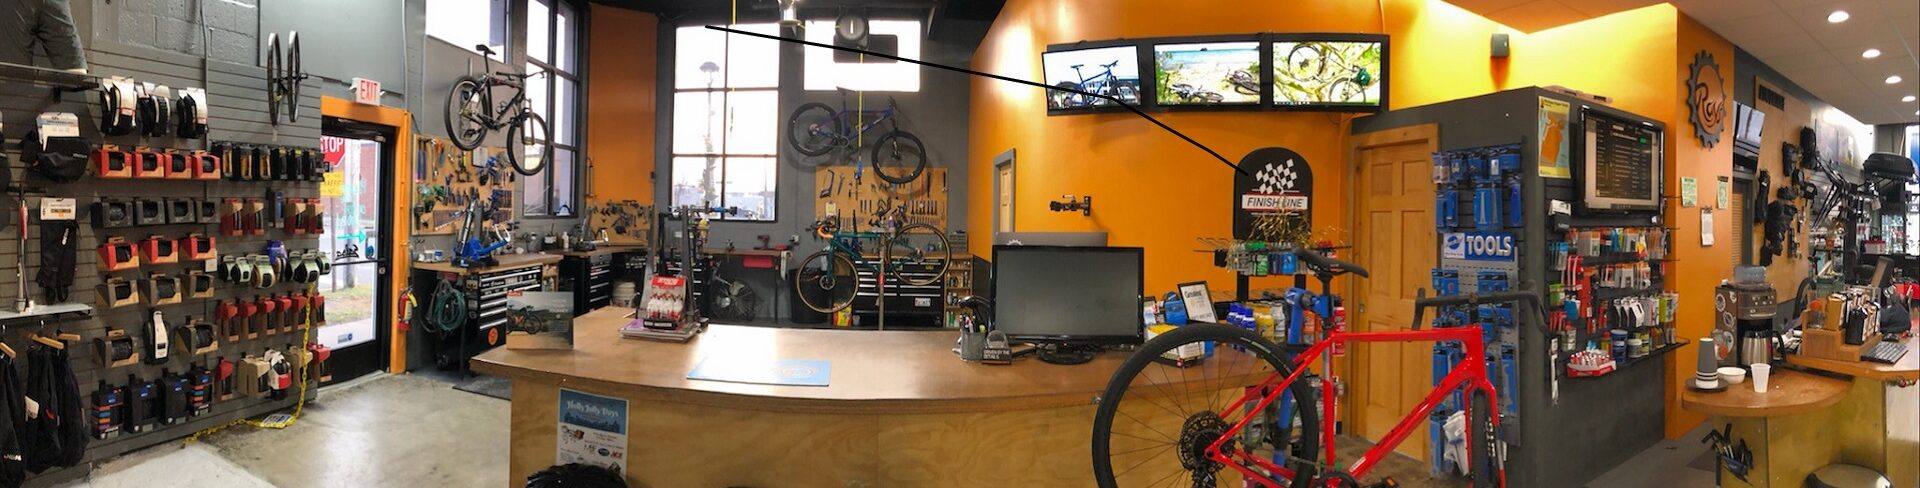 Rays Bike Shop